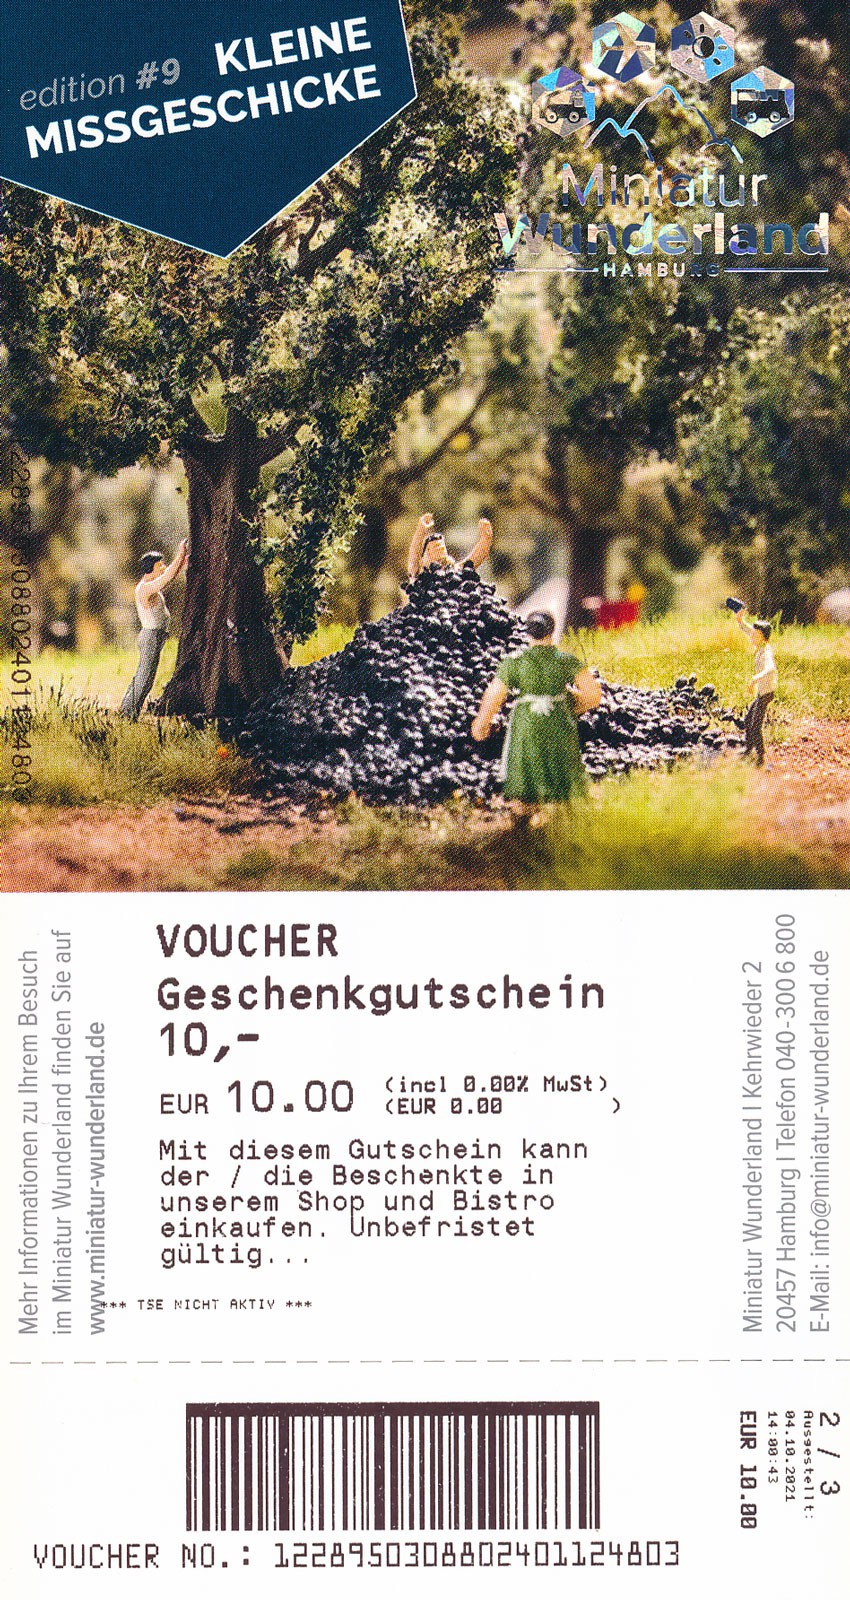 10 € Gift Voucher for Shop or Bistro